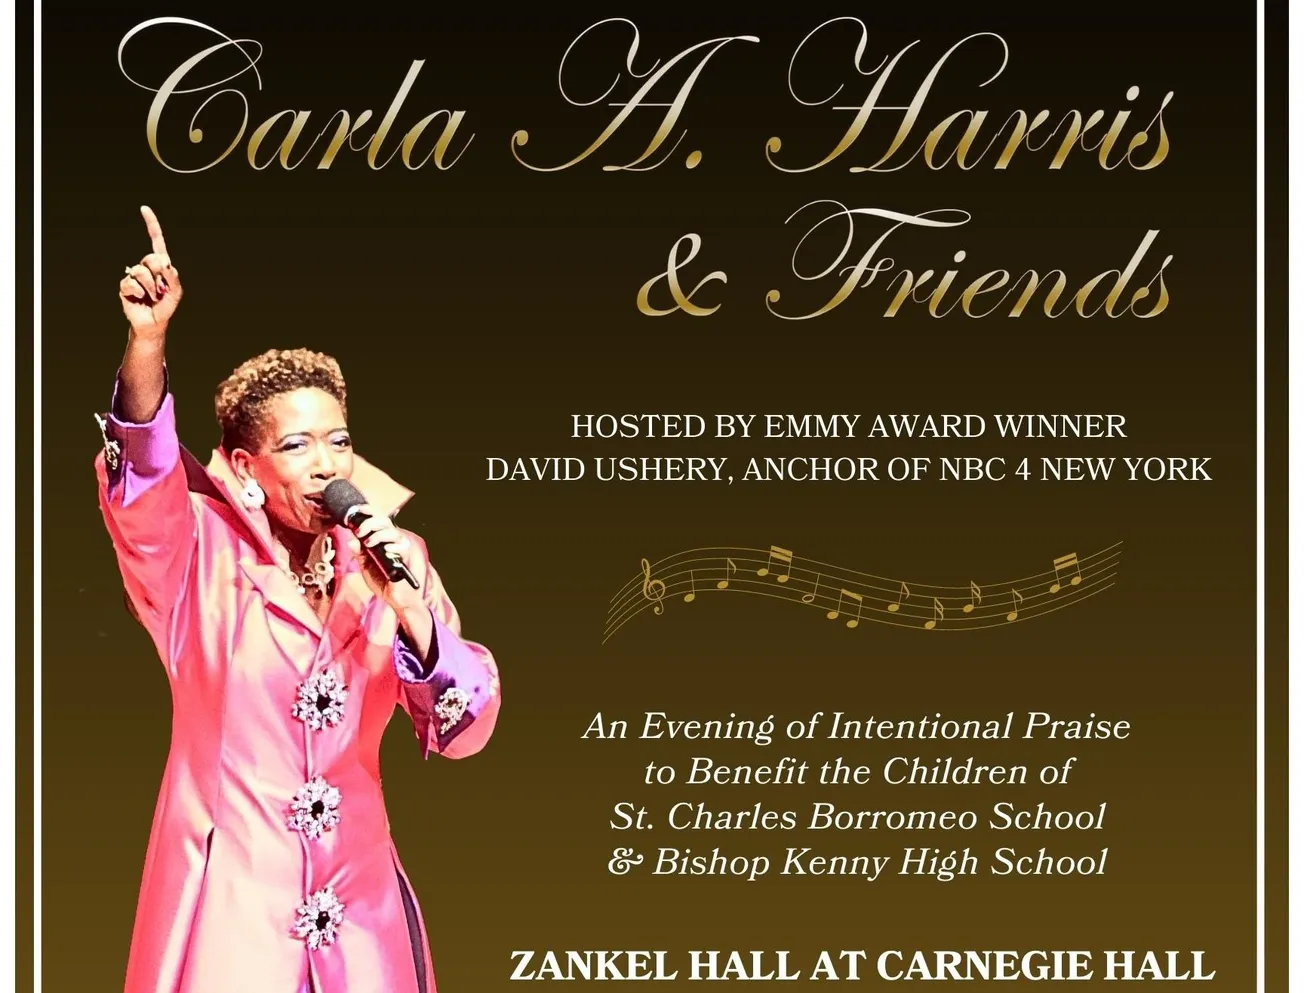 Carla Harris to play Carnegie Hall for Catholic school benefit